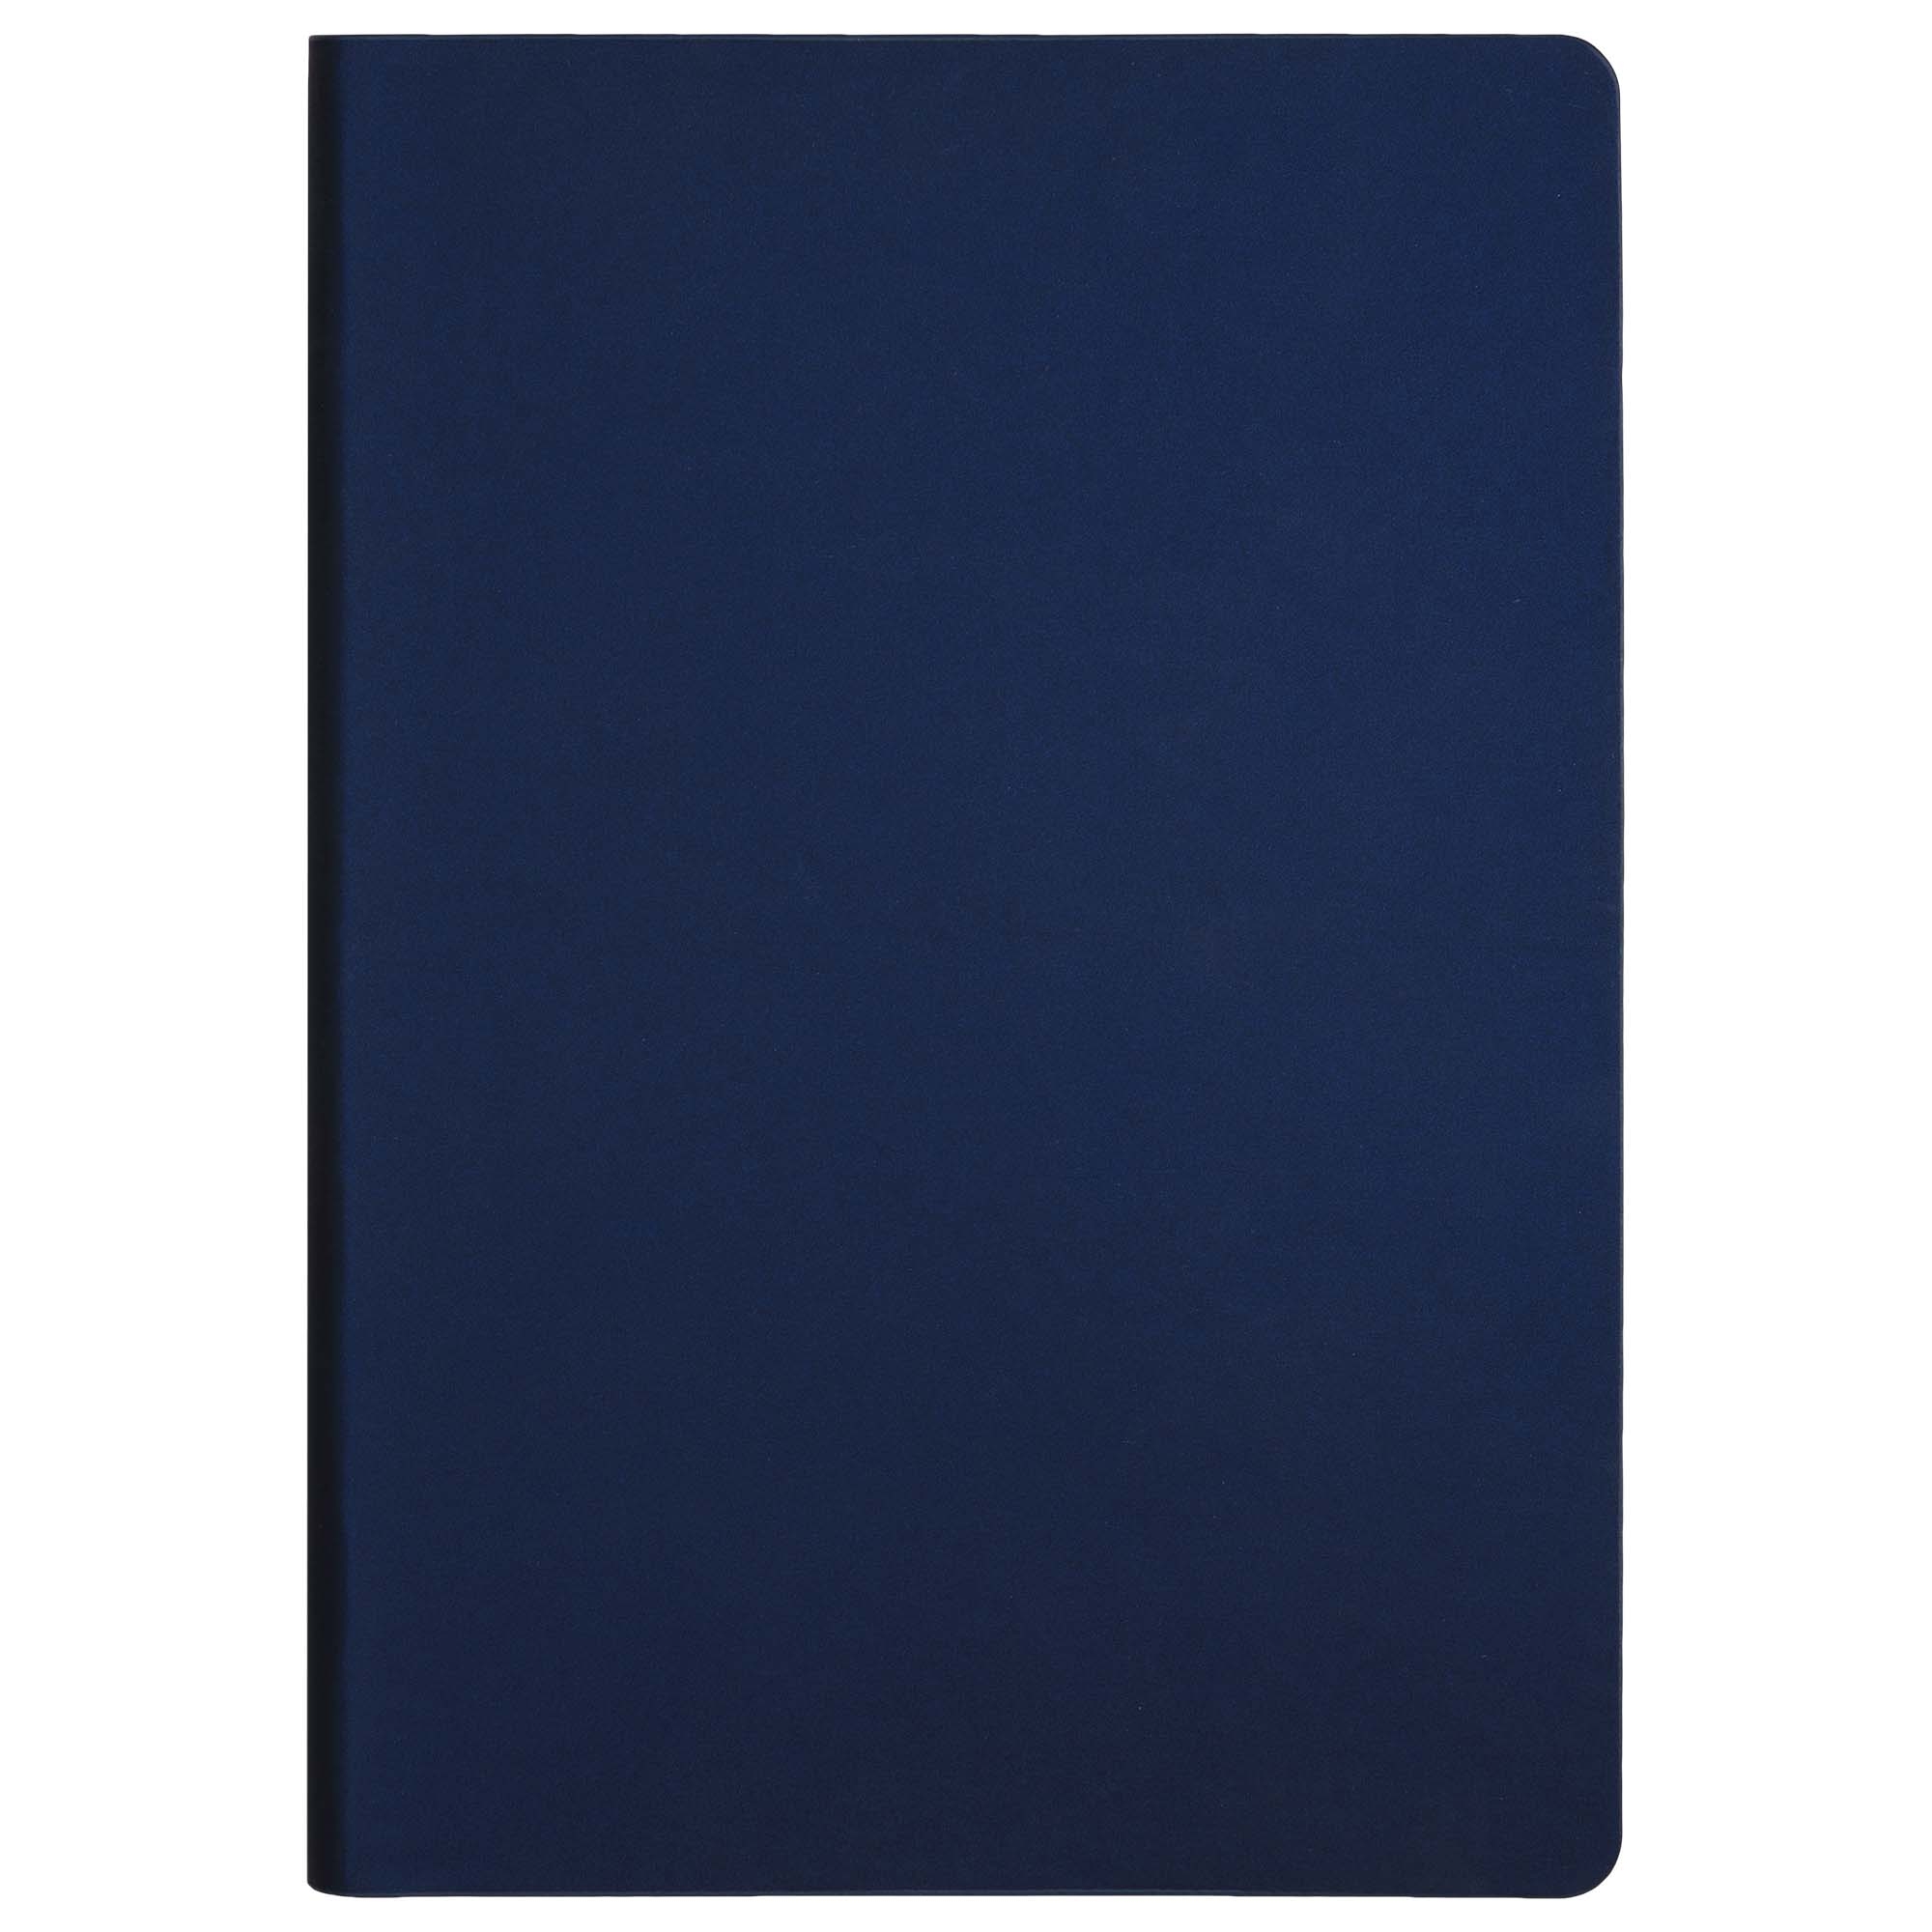 Ежедневник Star недатированный, синий (без упаковки, без стикера), синий